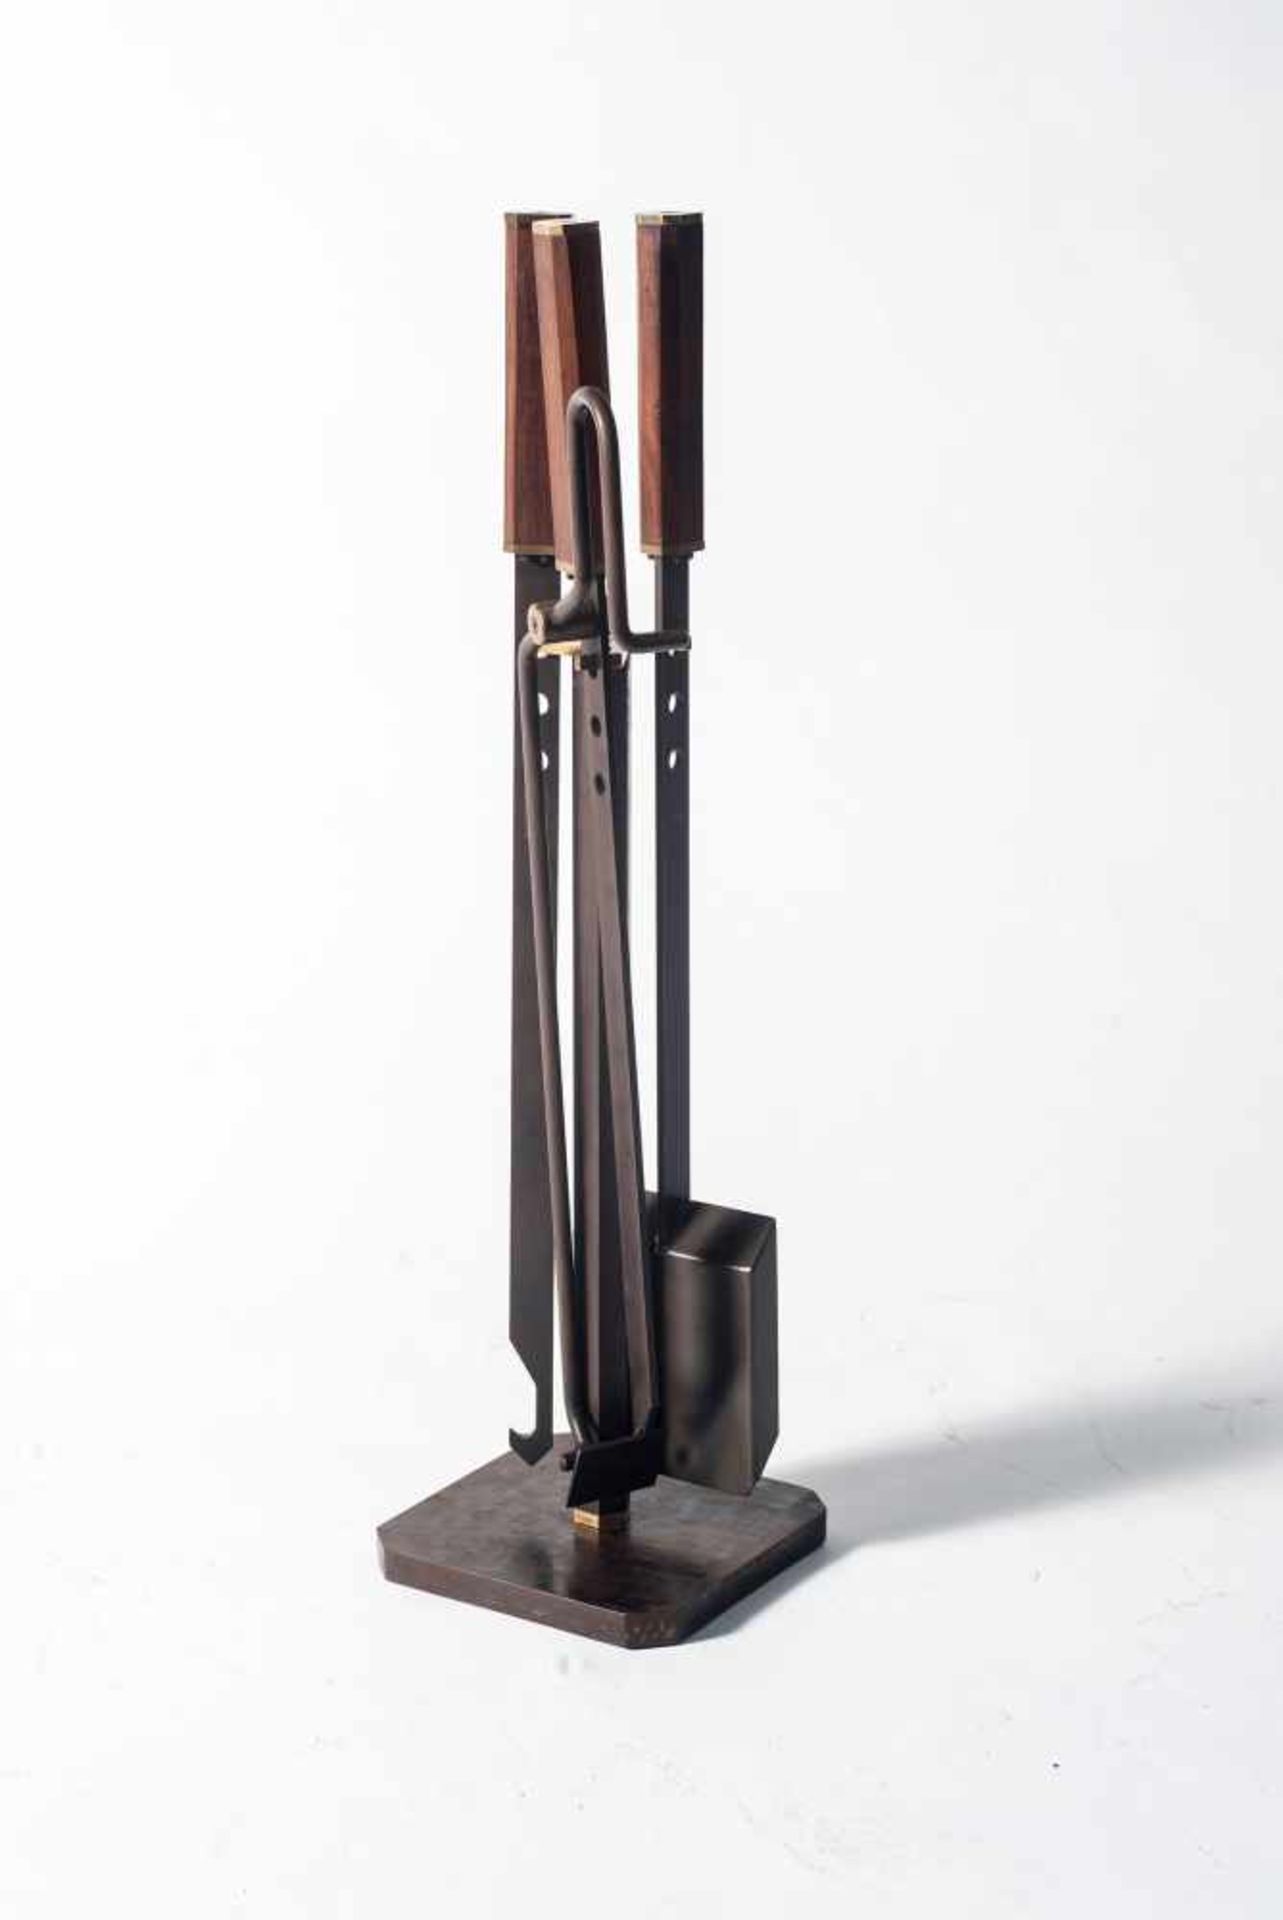 Kaminset, 1970er Jahre Afra Scarpa; Tobia Scarpa H. 74 x 20 x 20 cm. Werkzeuge je 70 cm lang. - Bild 2 aus 2